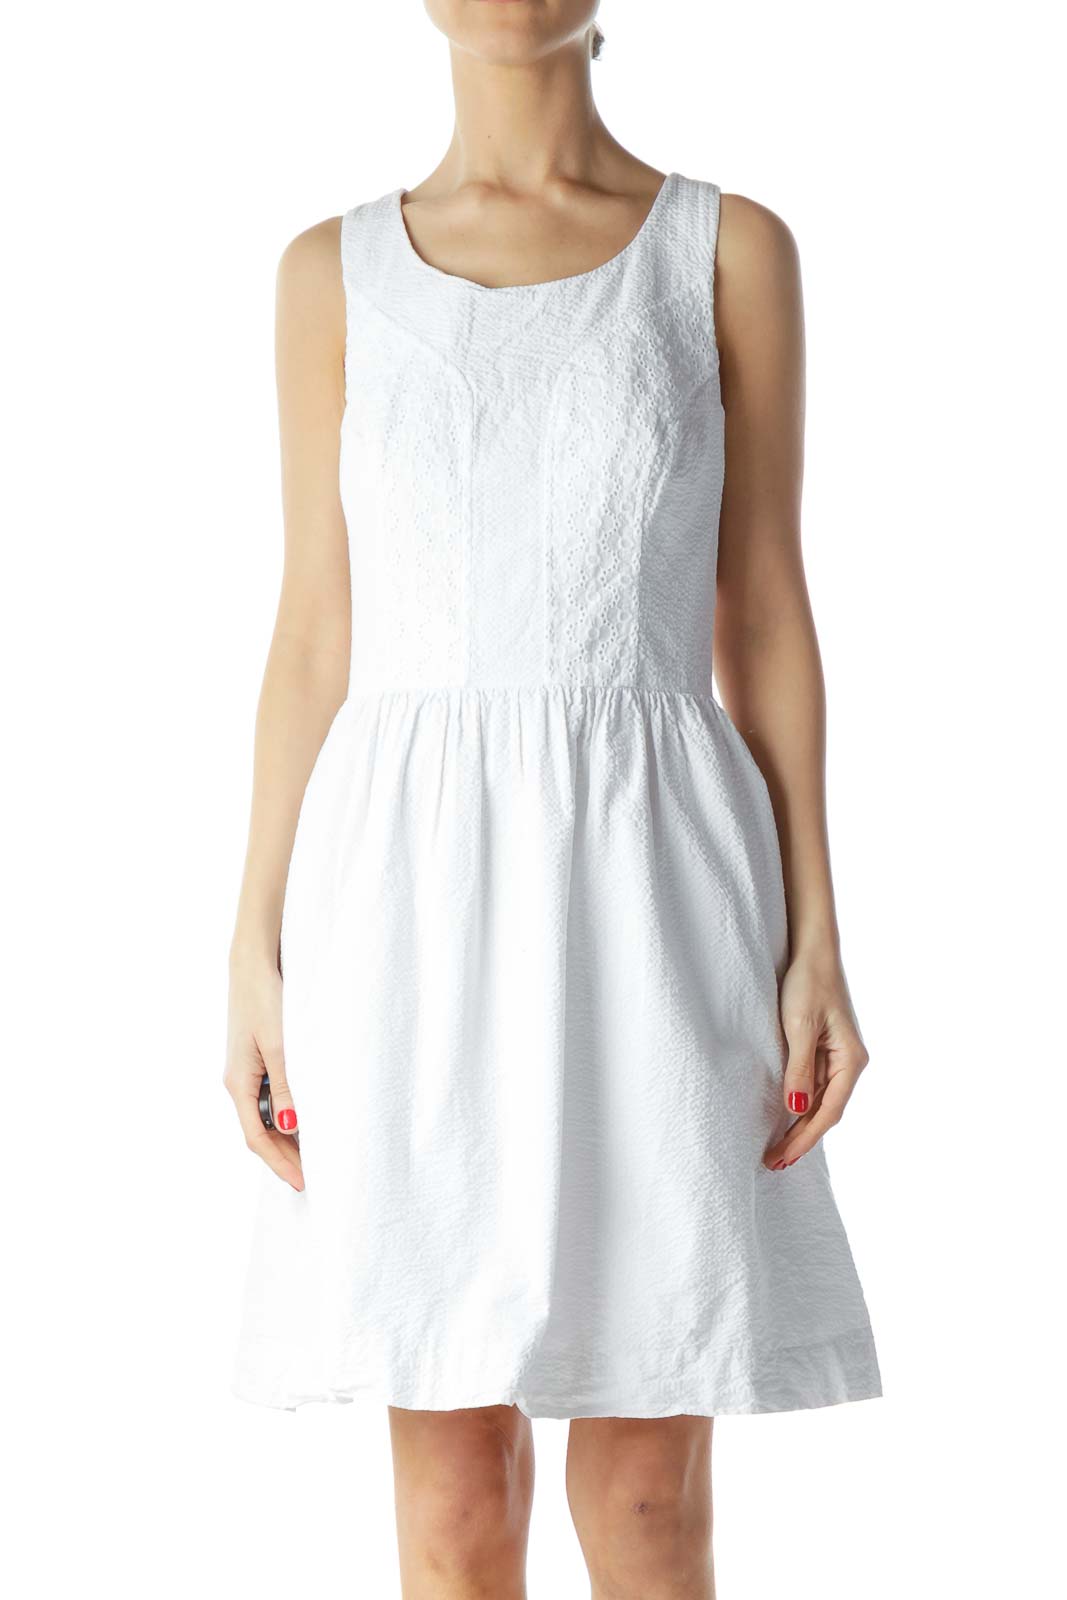 White Knit Textured 100% Cotton A-Line Dress Front